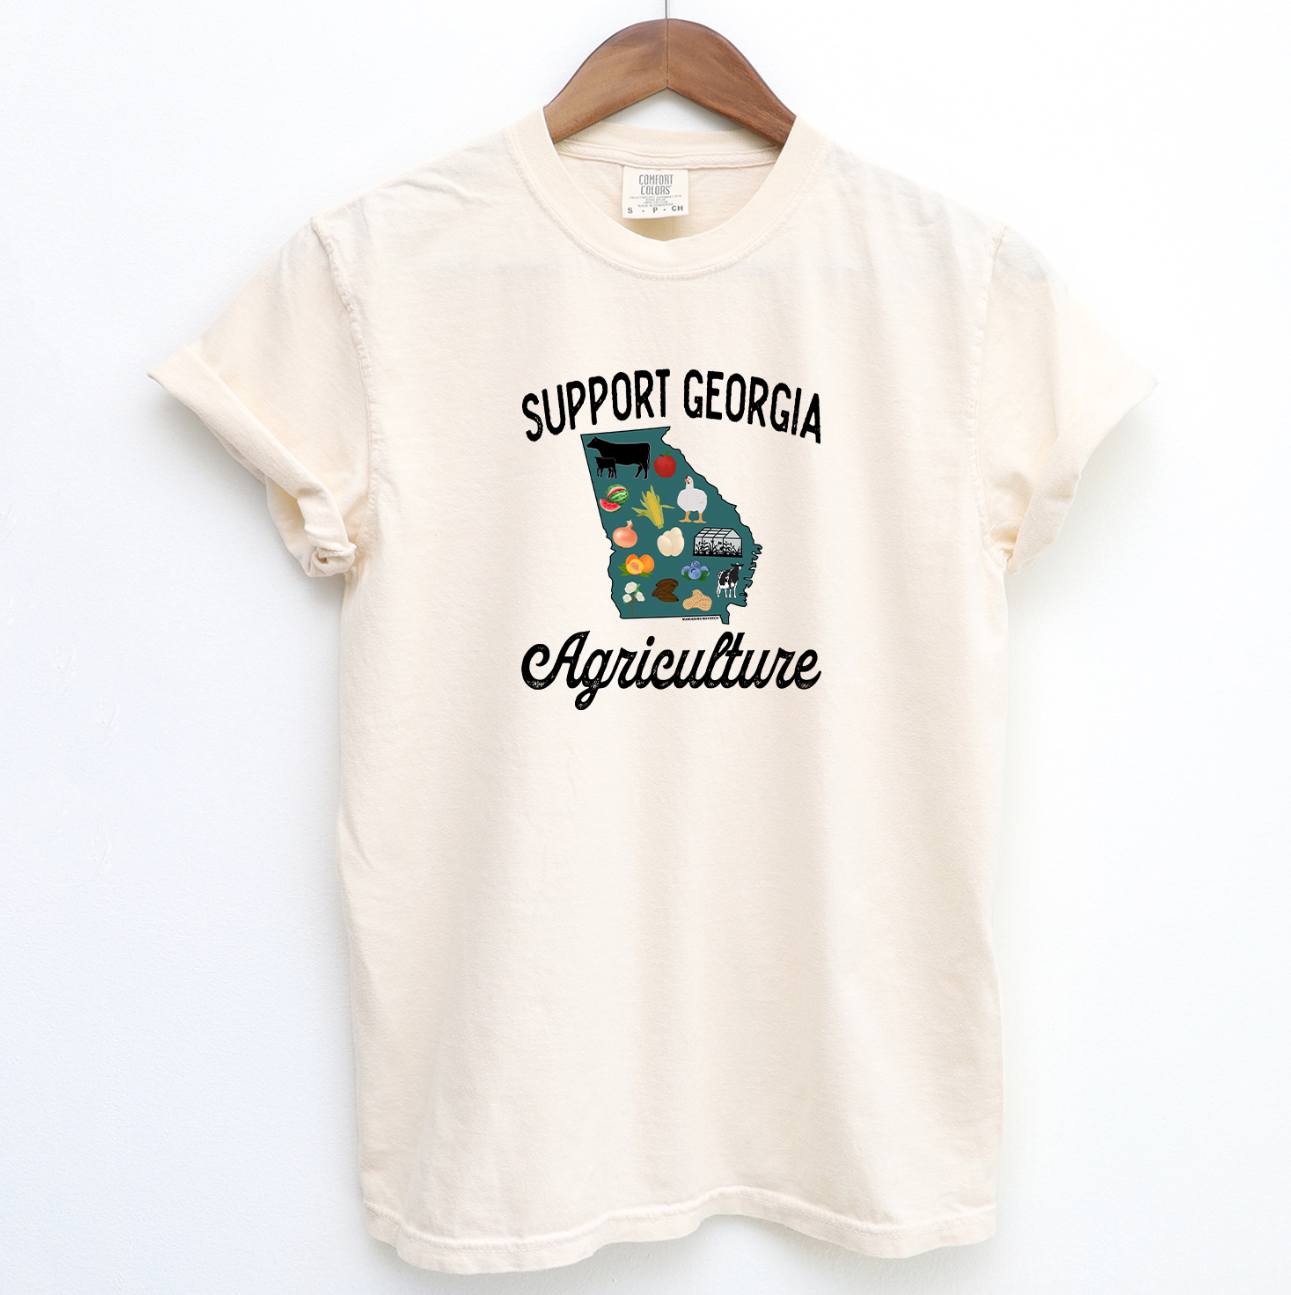 Support Georgia Agriculture ComfortWash/ComfortColor T-Shirt (S-4XL) - Multiple Colors!